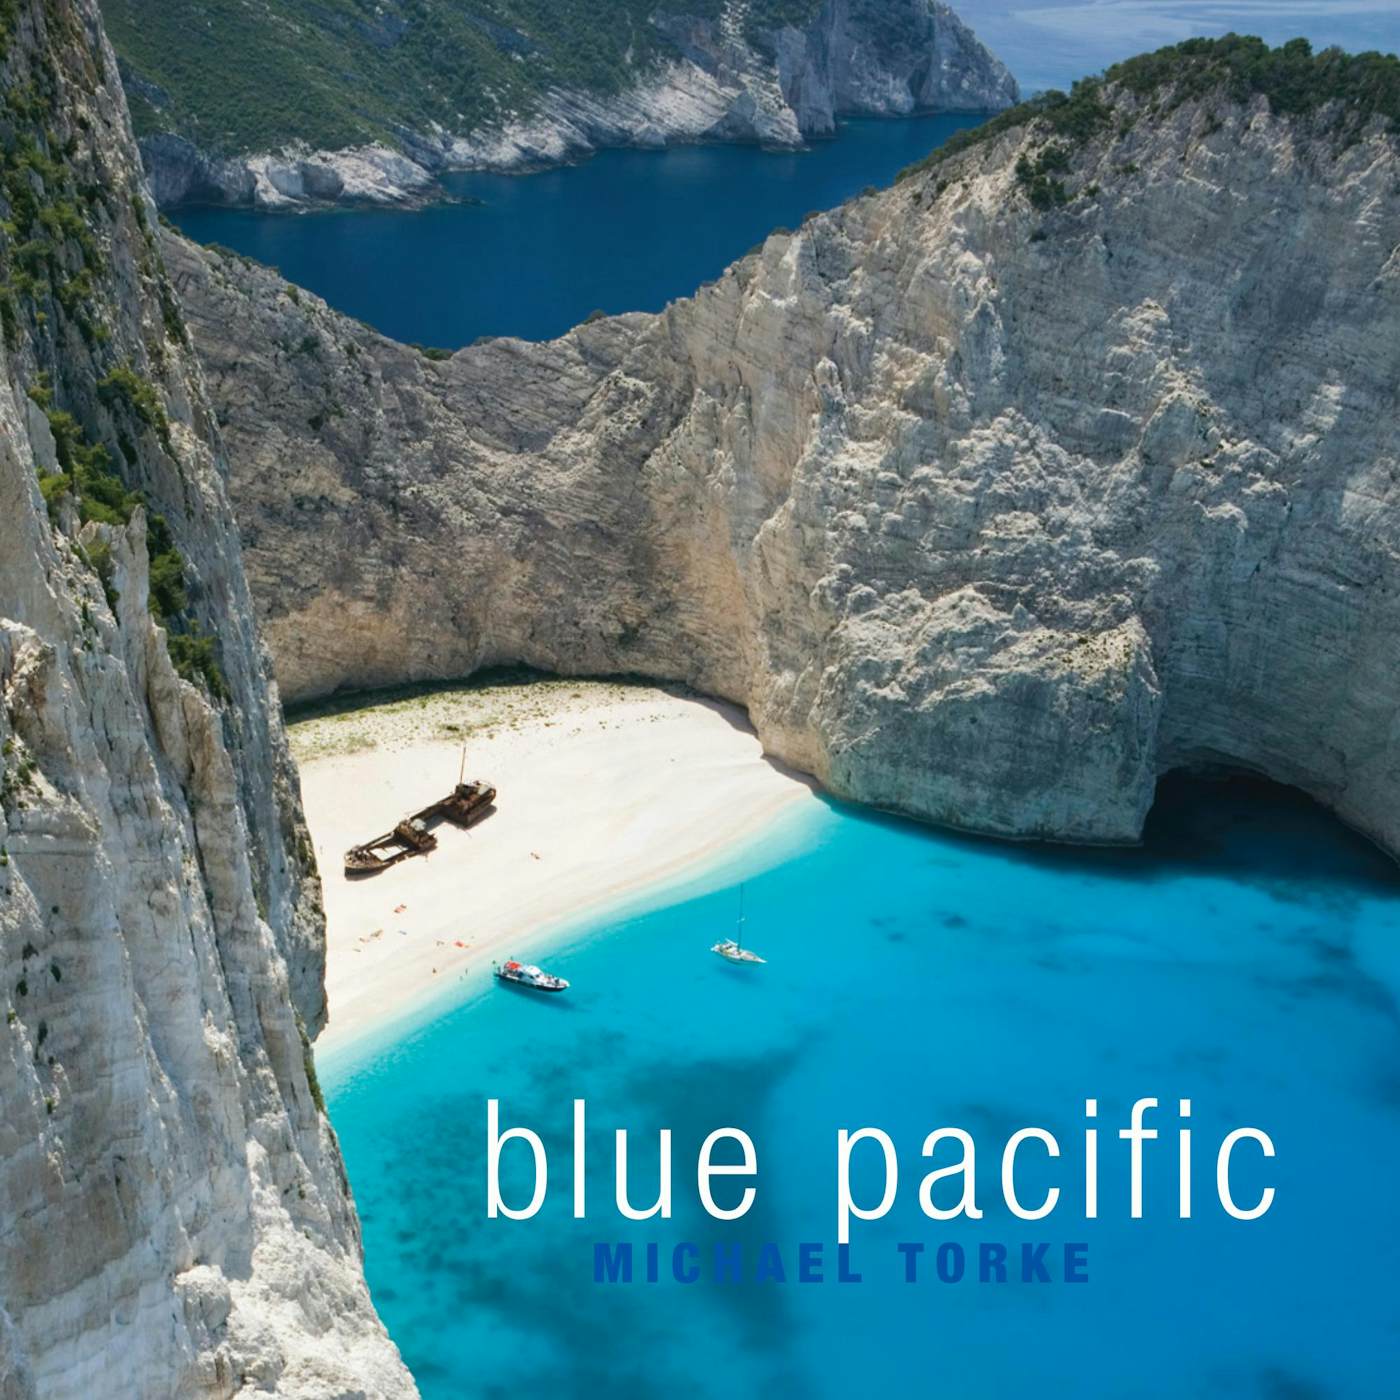 Michael Torke Blue Pacific CD